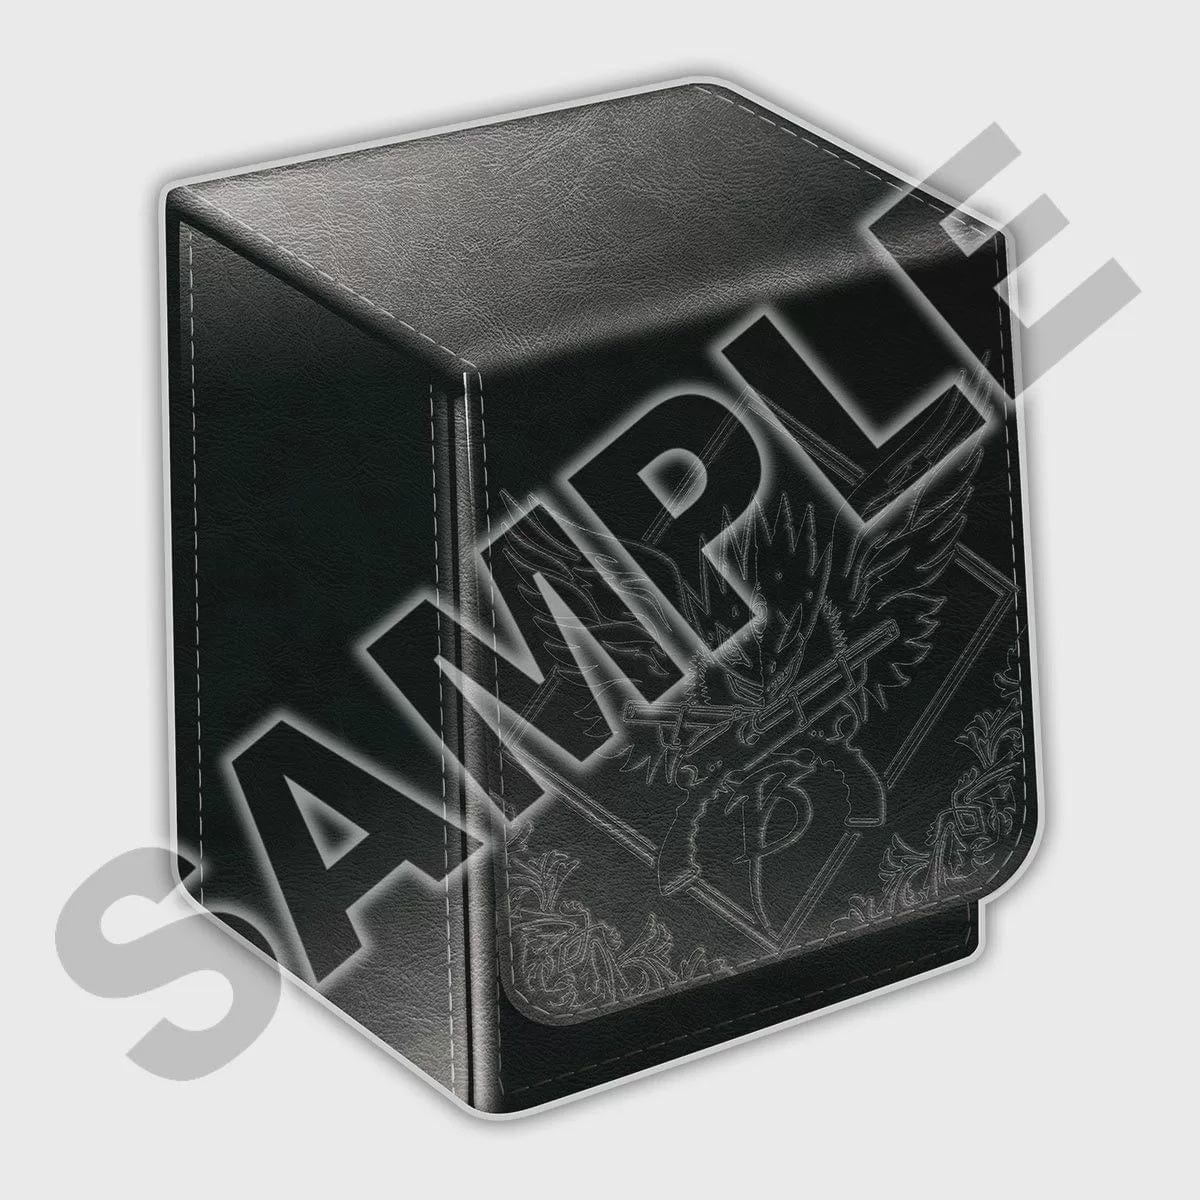 digimon card game Digimon Card Game Deck Box and Card Set Black